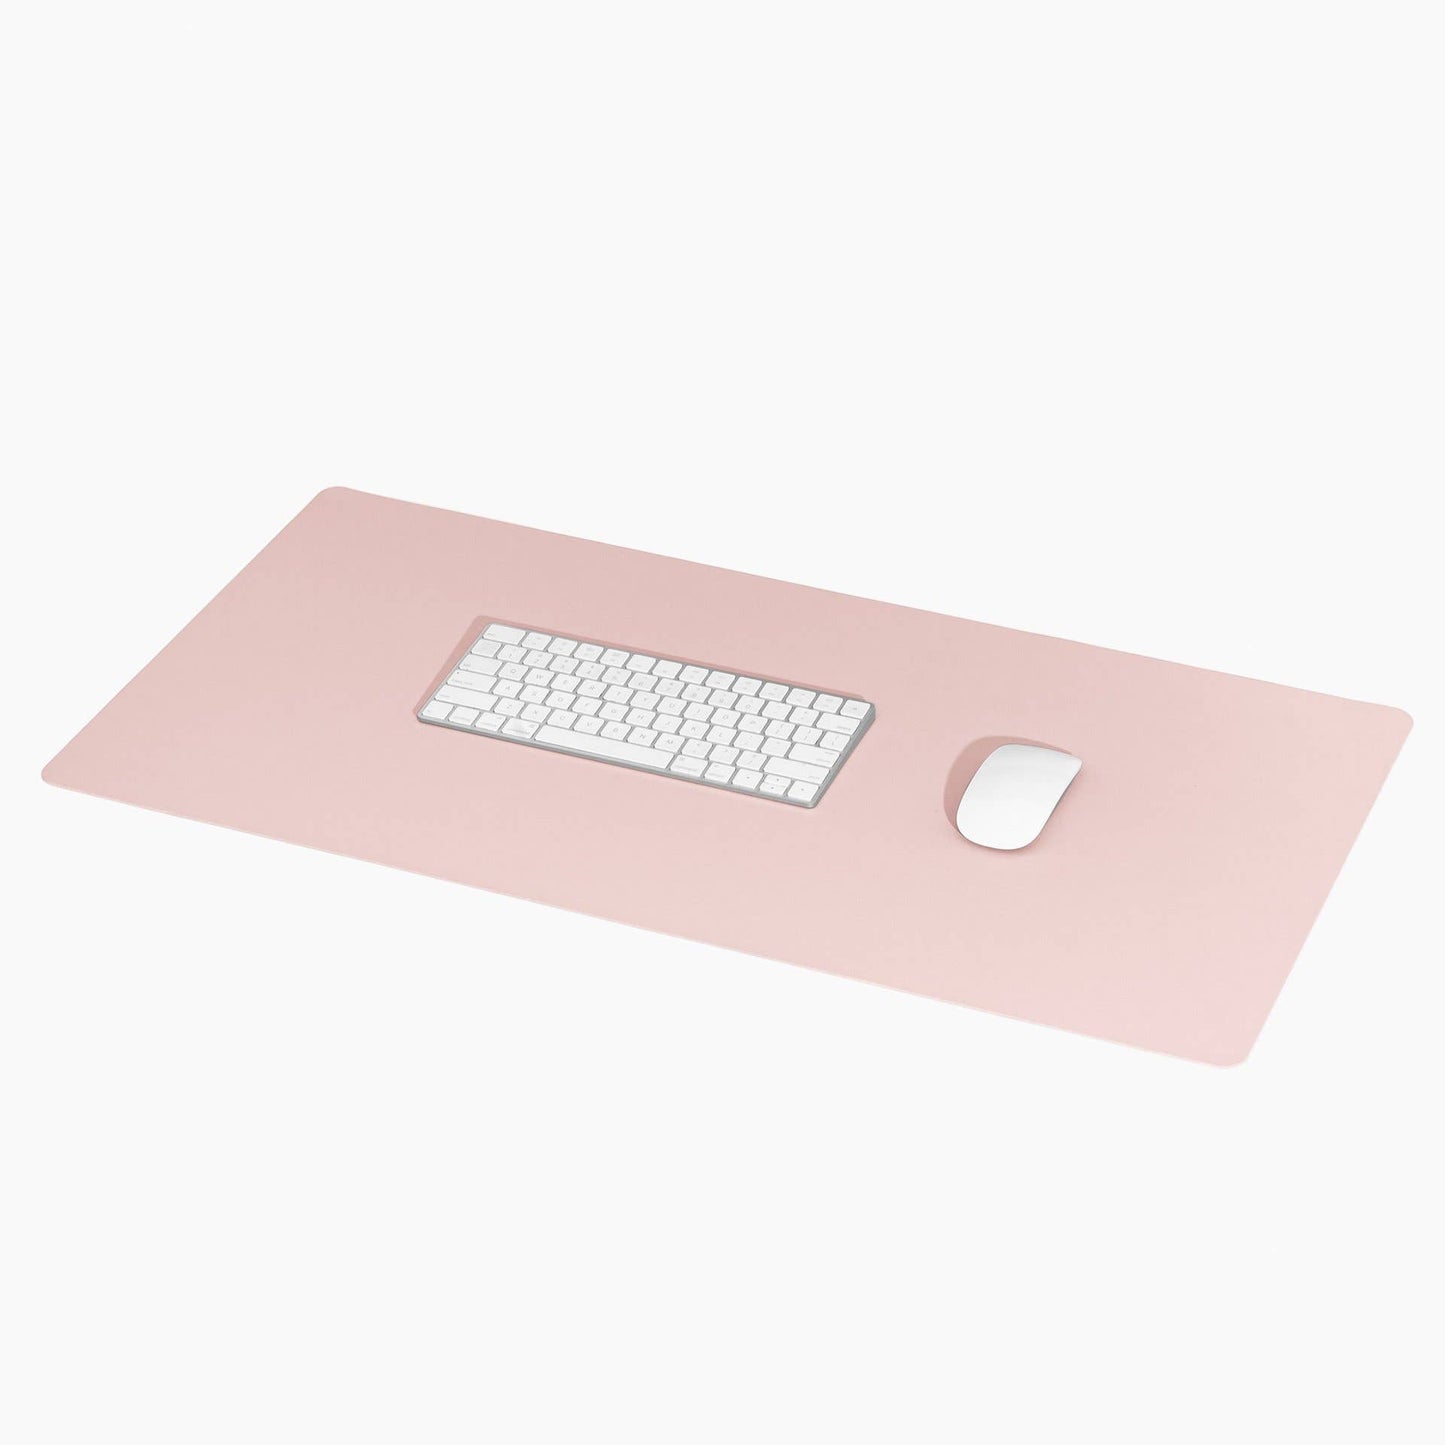 Poketo - Minimalist Desk Mat in Blush